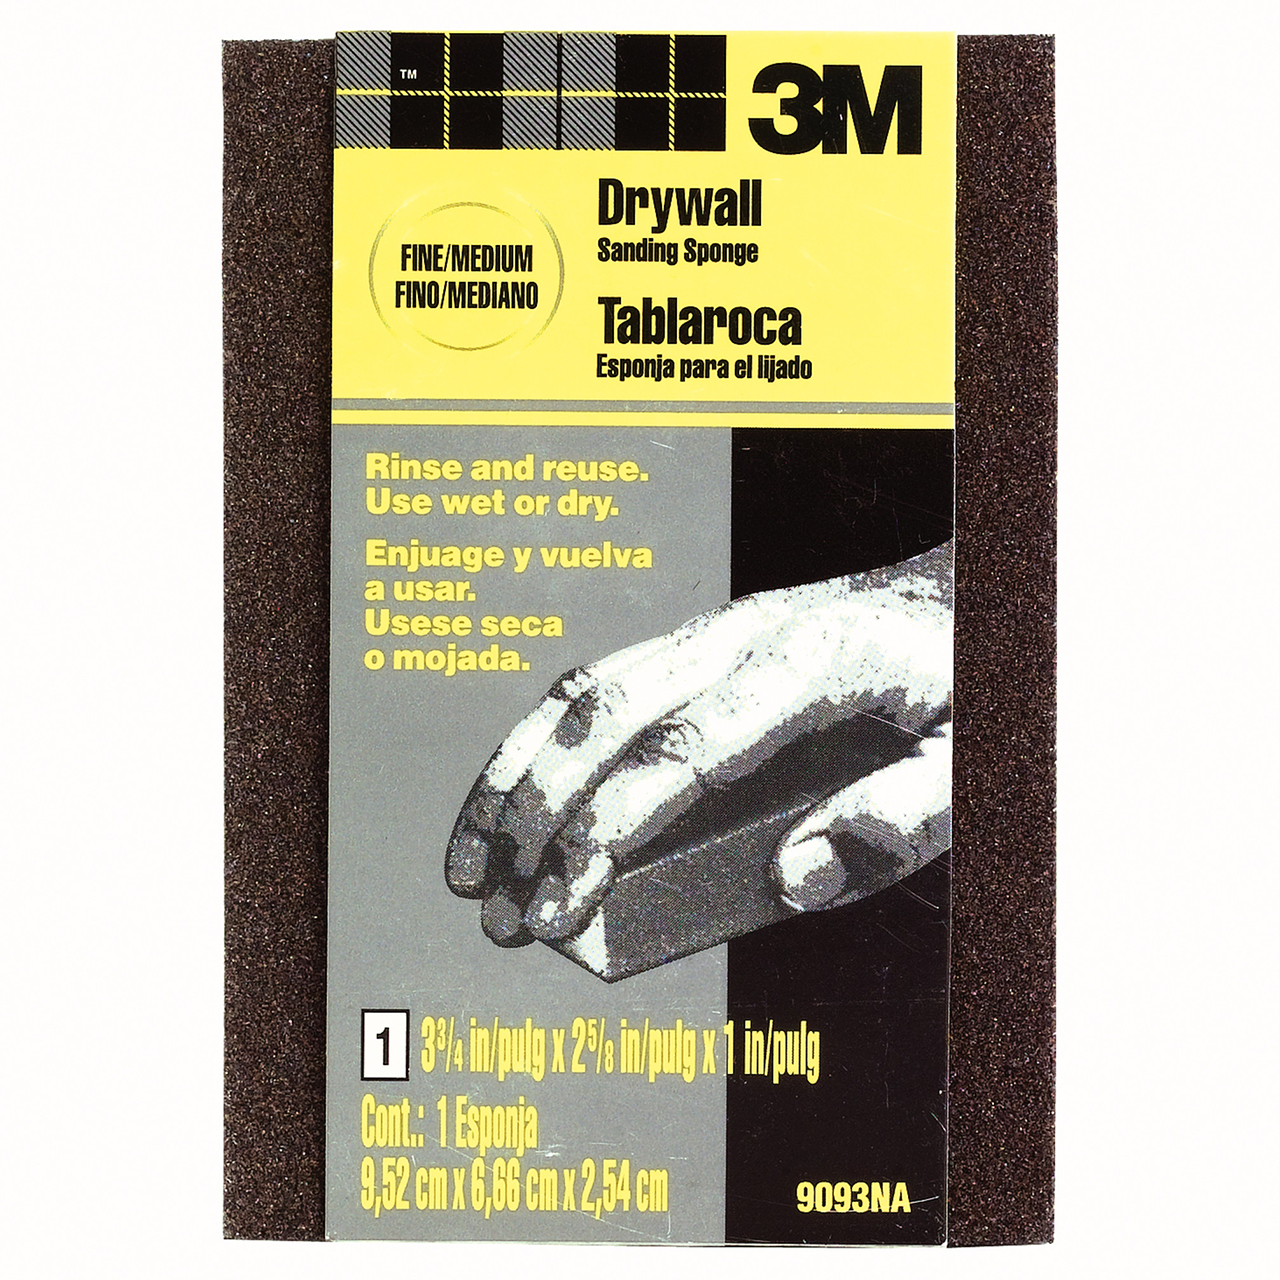 3M 2 5/8 in. x 3 3/4 in x 1 in. Dual Grit Fine/Medium Drywall